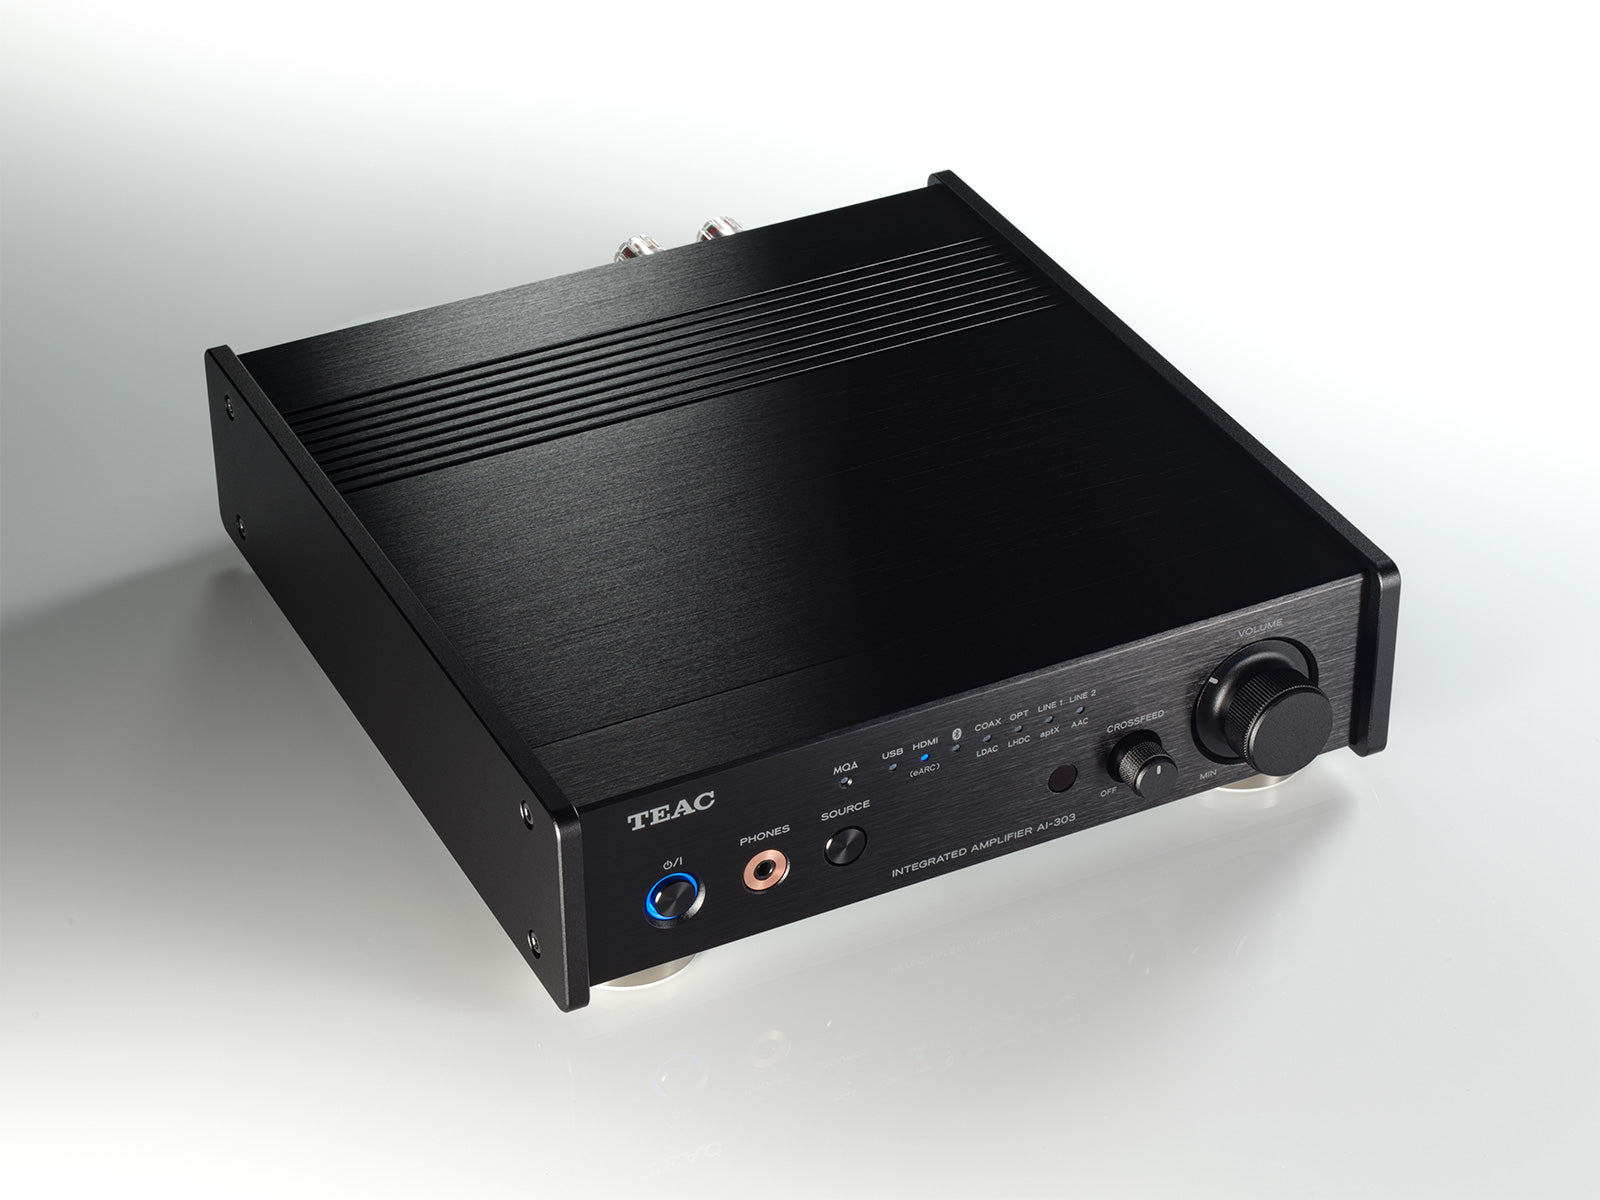 TEAC announces new USB DAC Amplifier AI-303, News Details